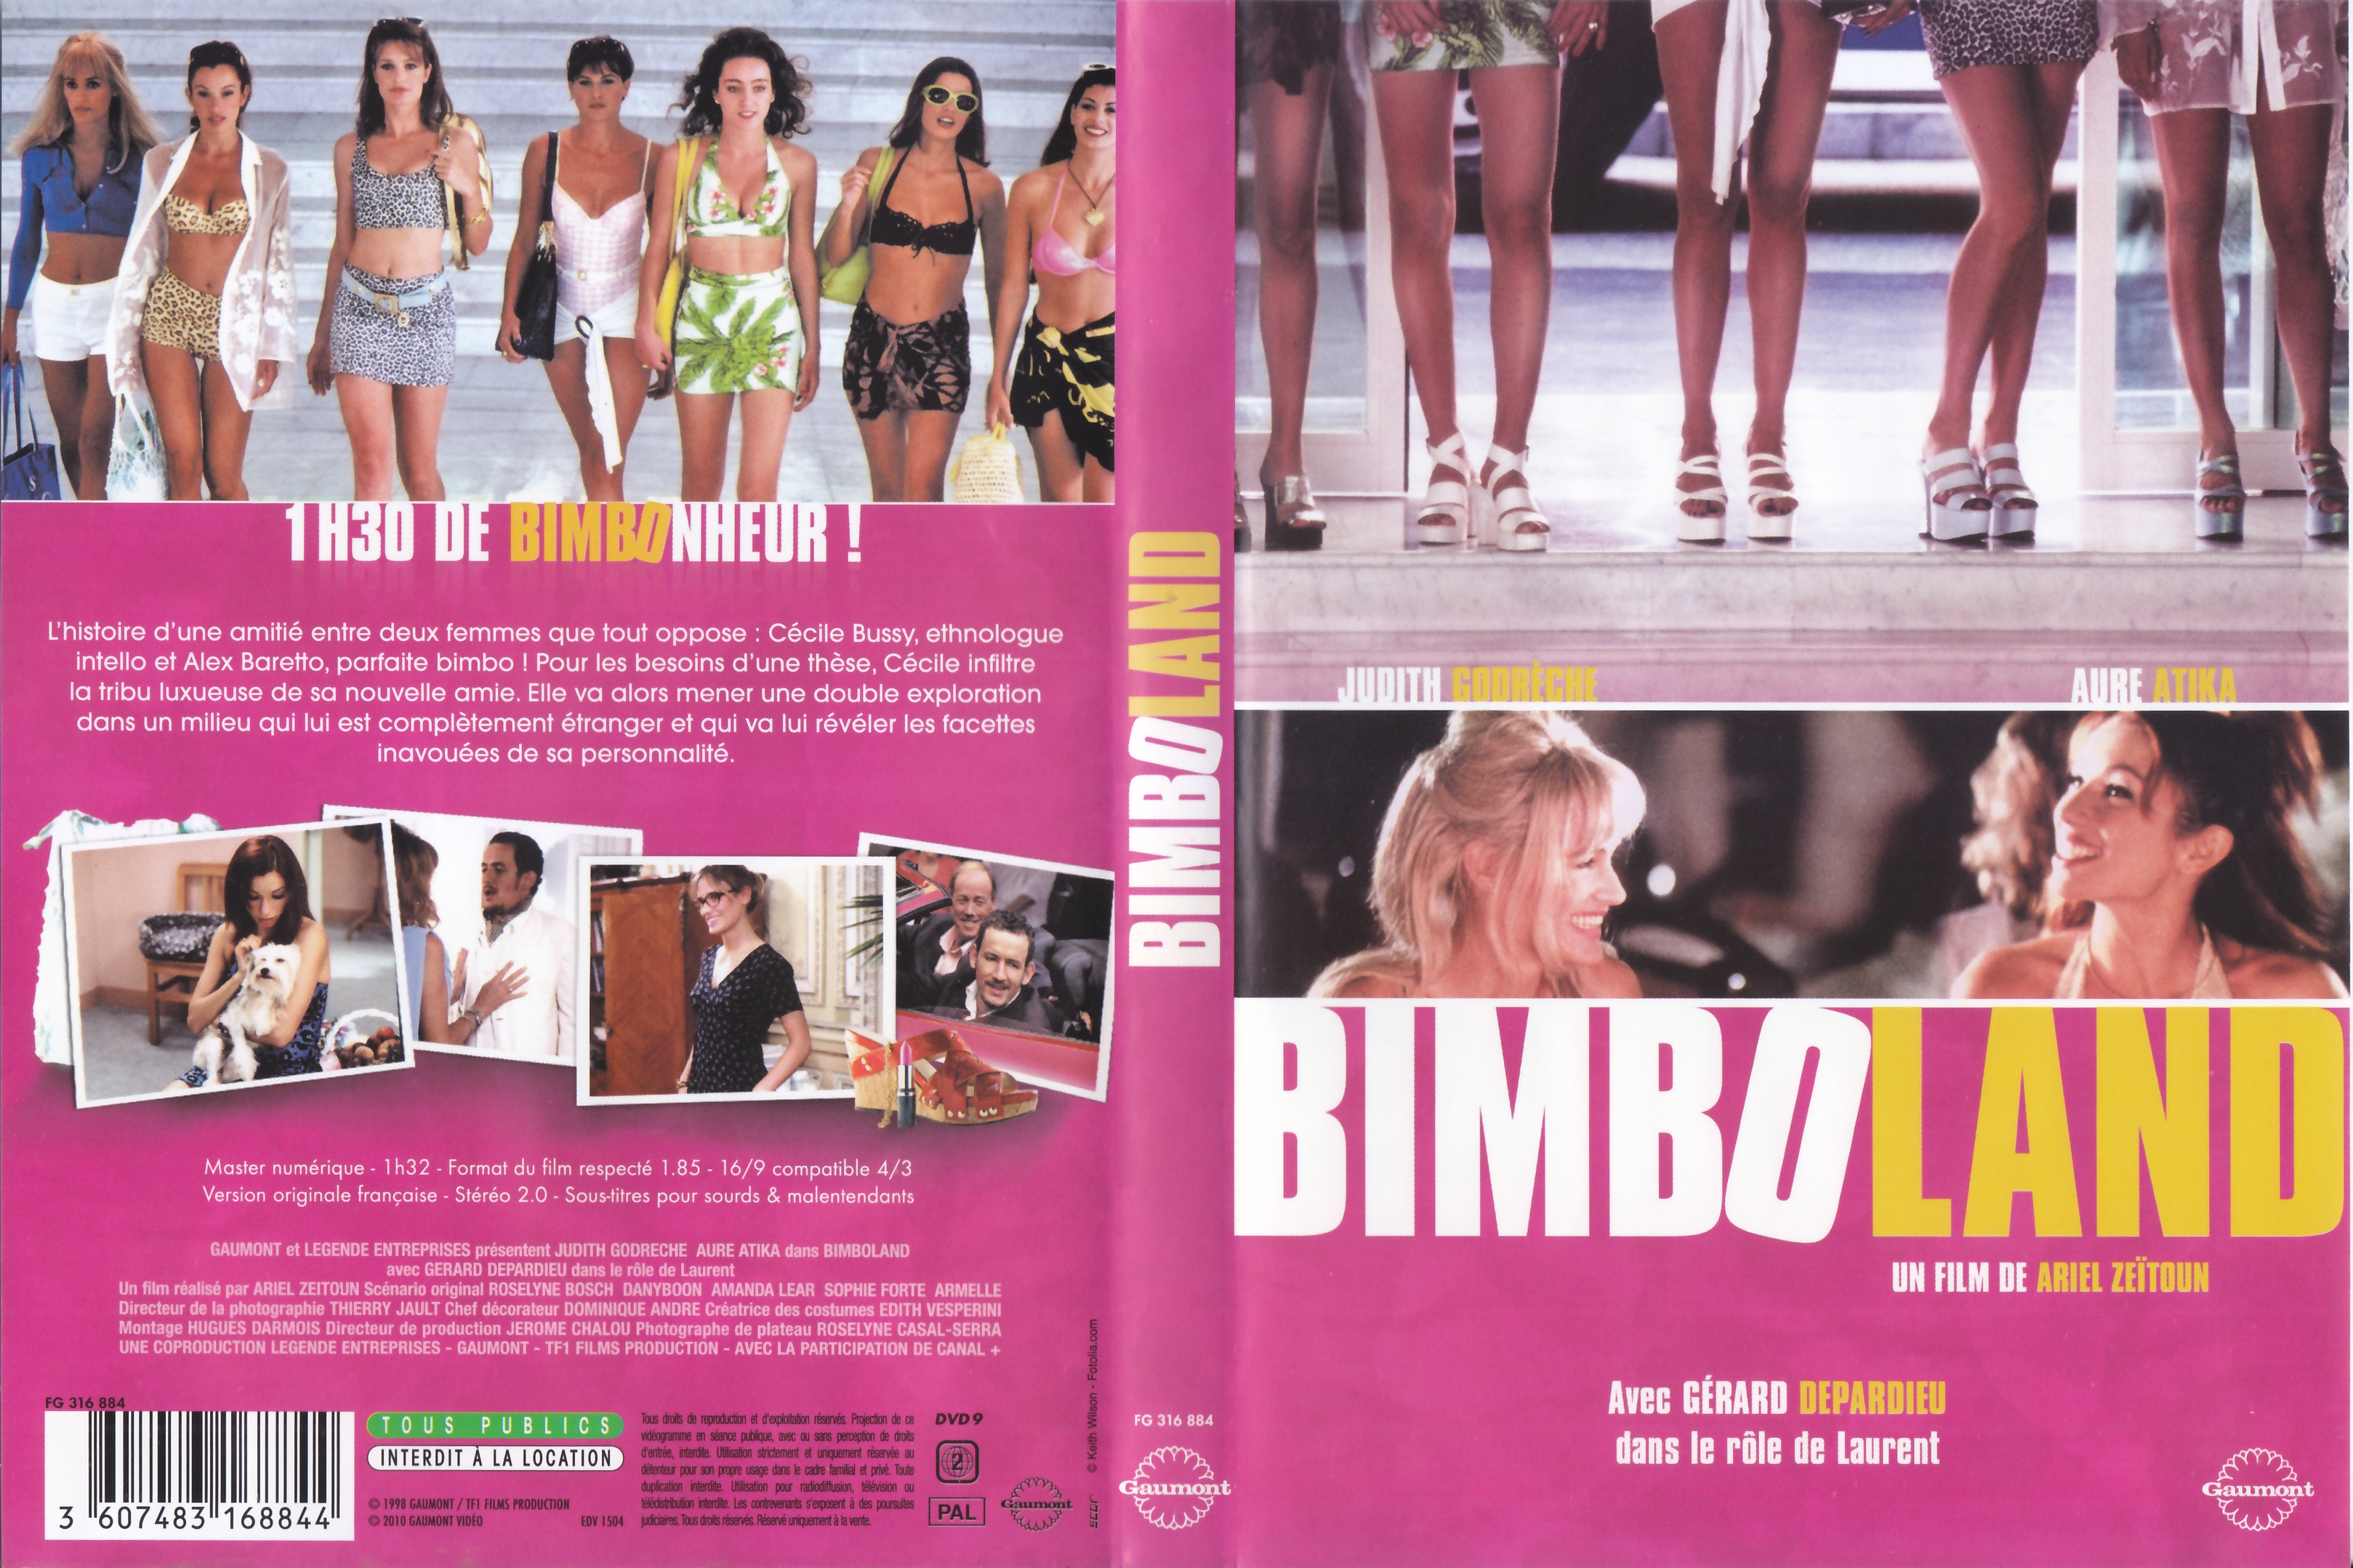 Jaquette DVD Bimboland v2